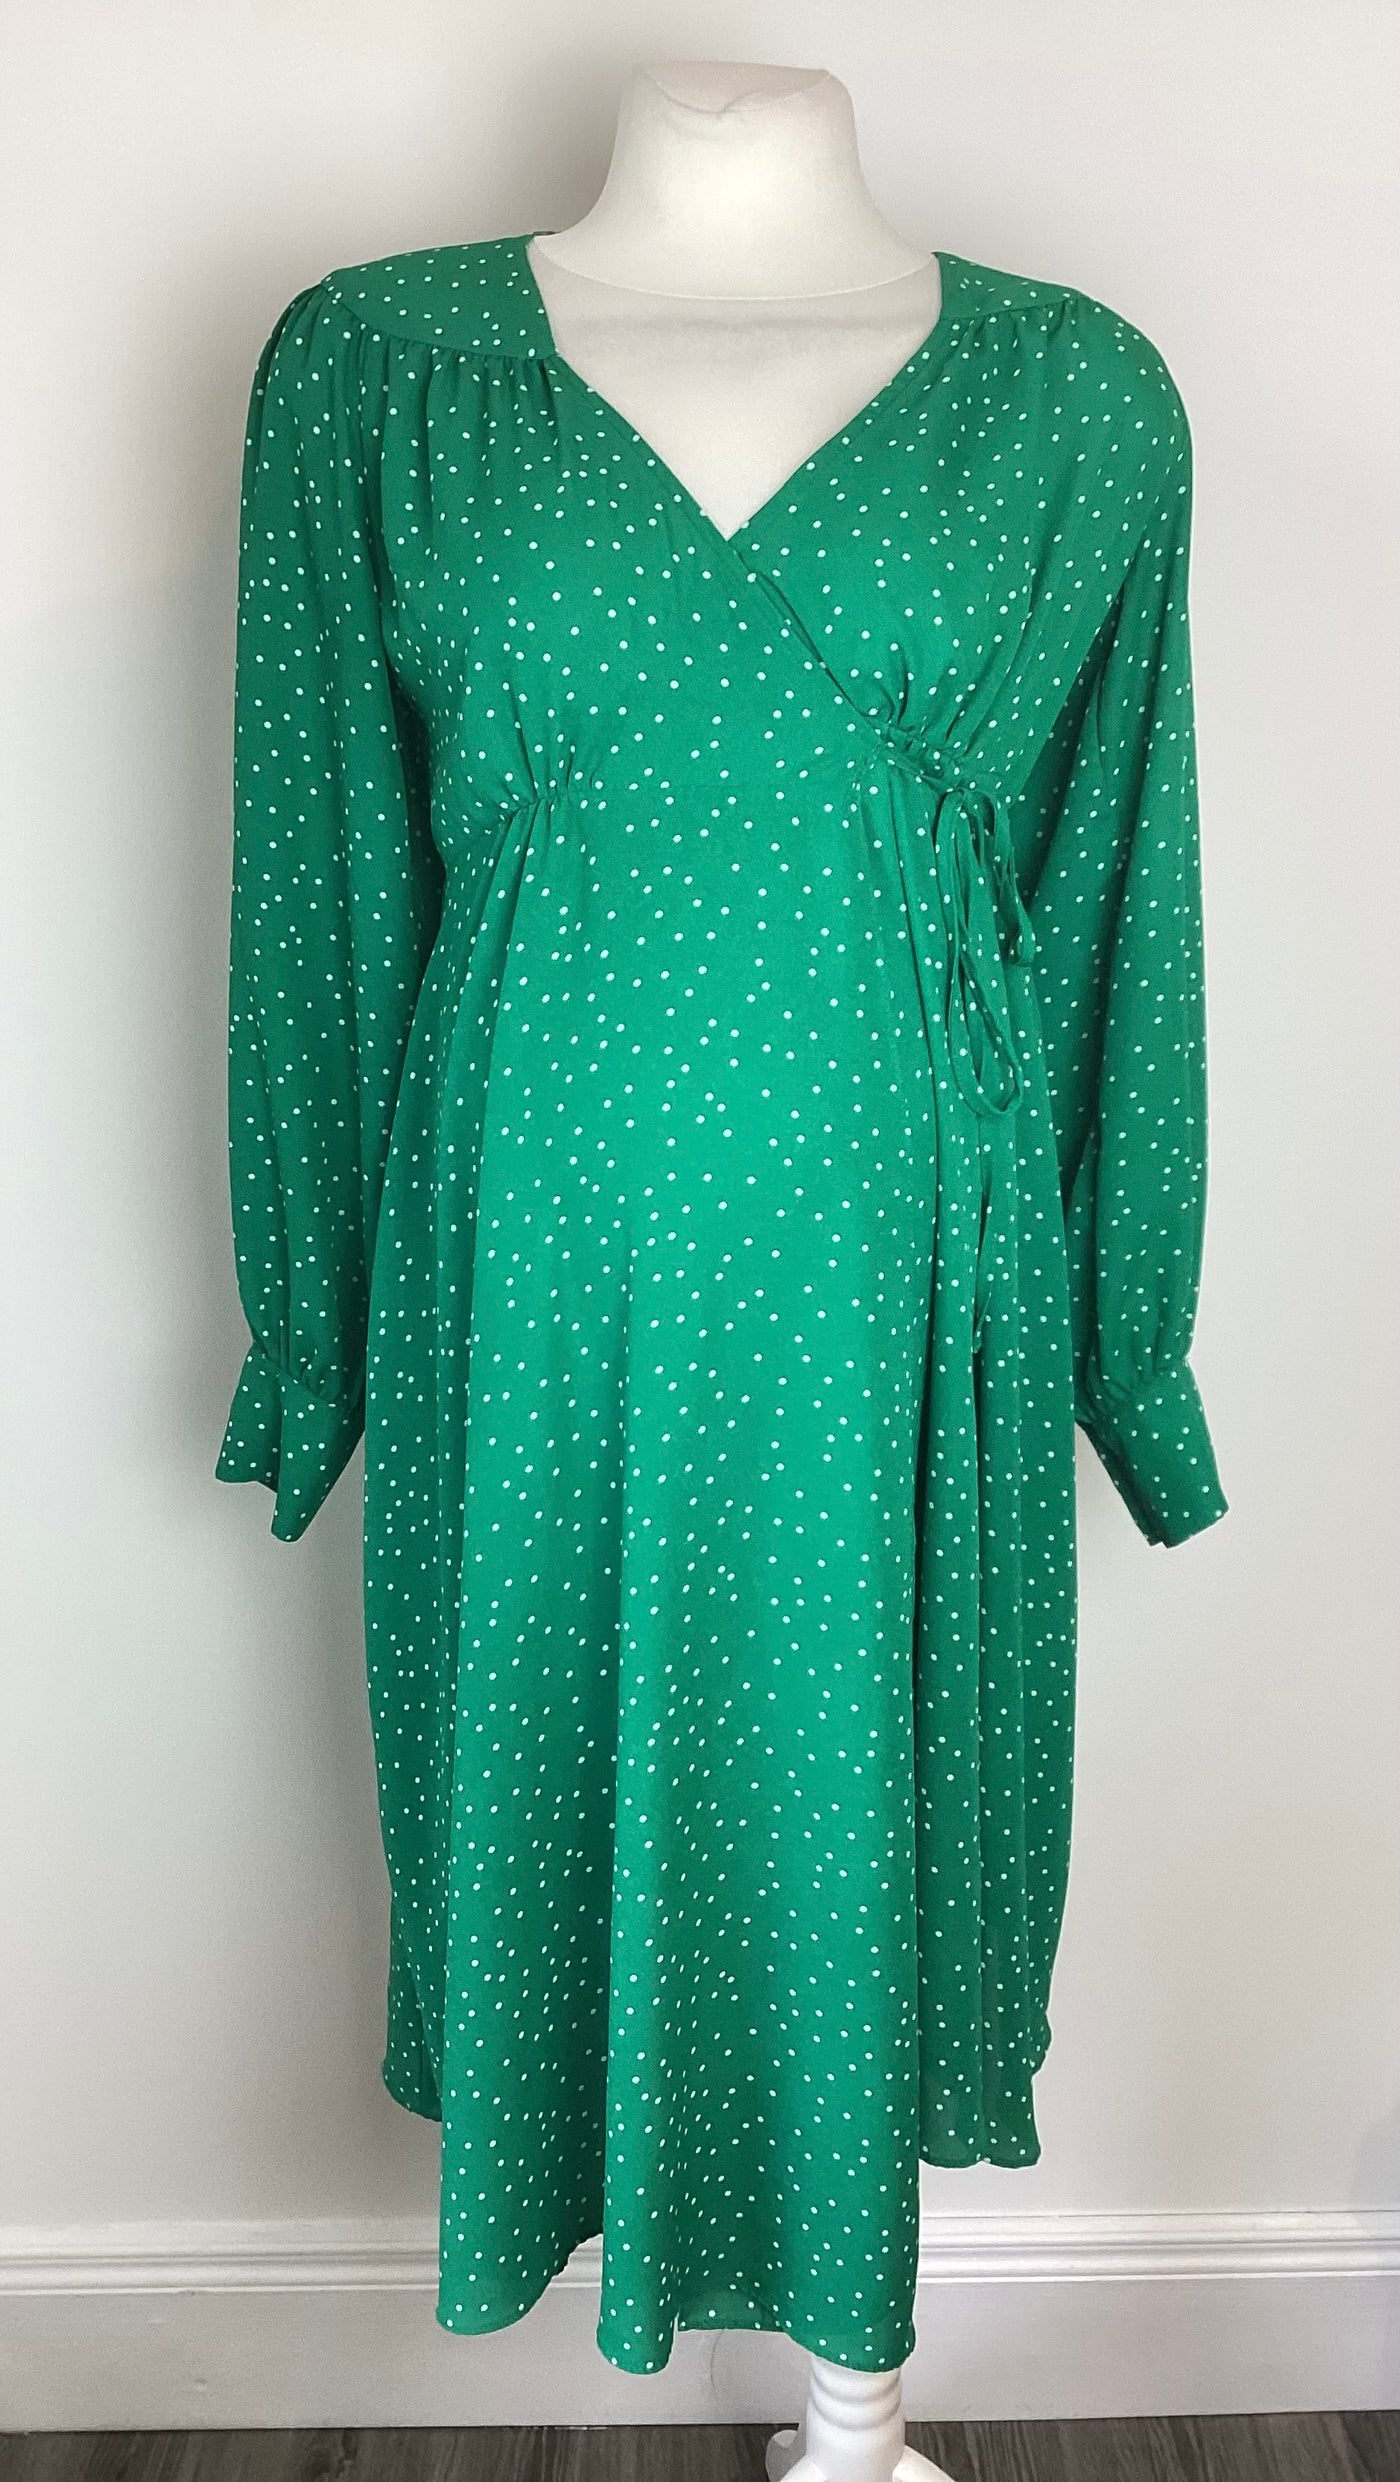 Topshop Maternity green & white polkadot wrapover maternity & nursing dress - Size 8